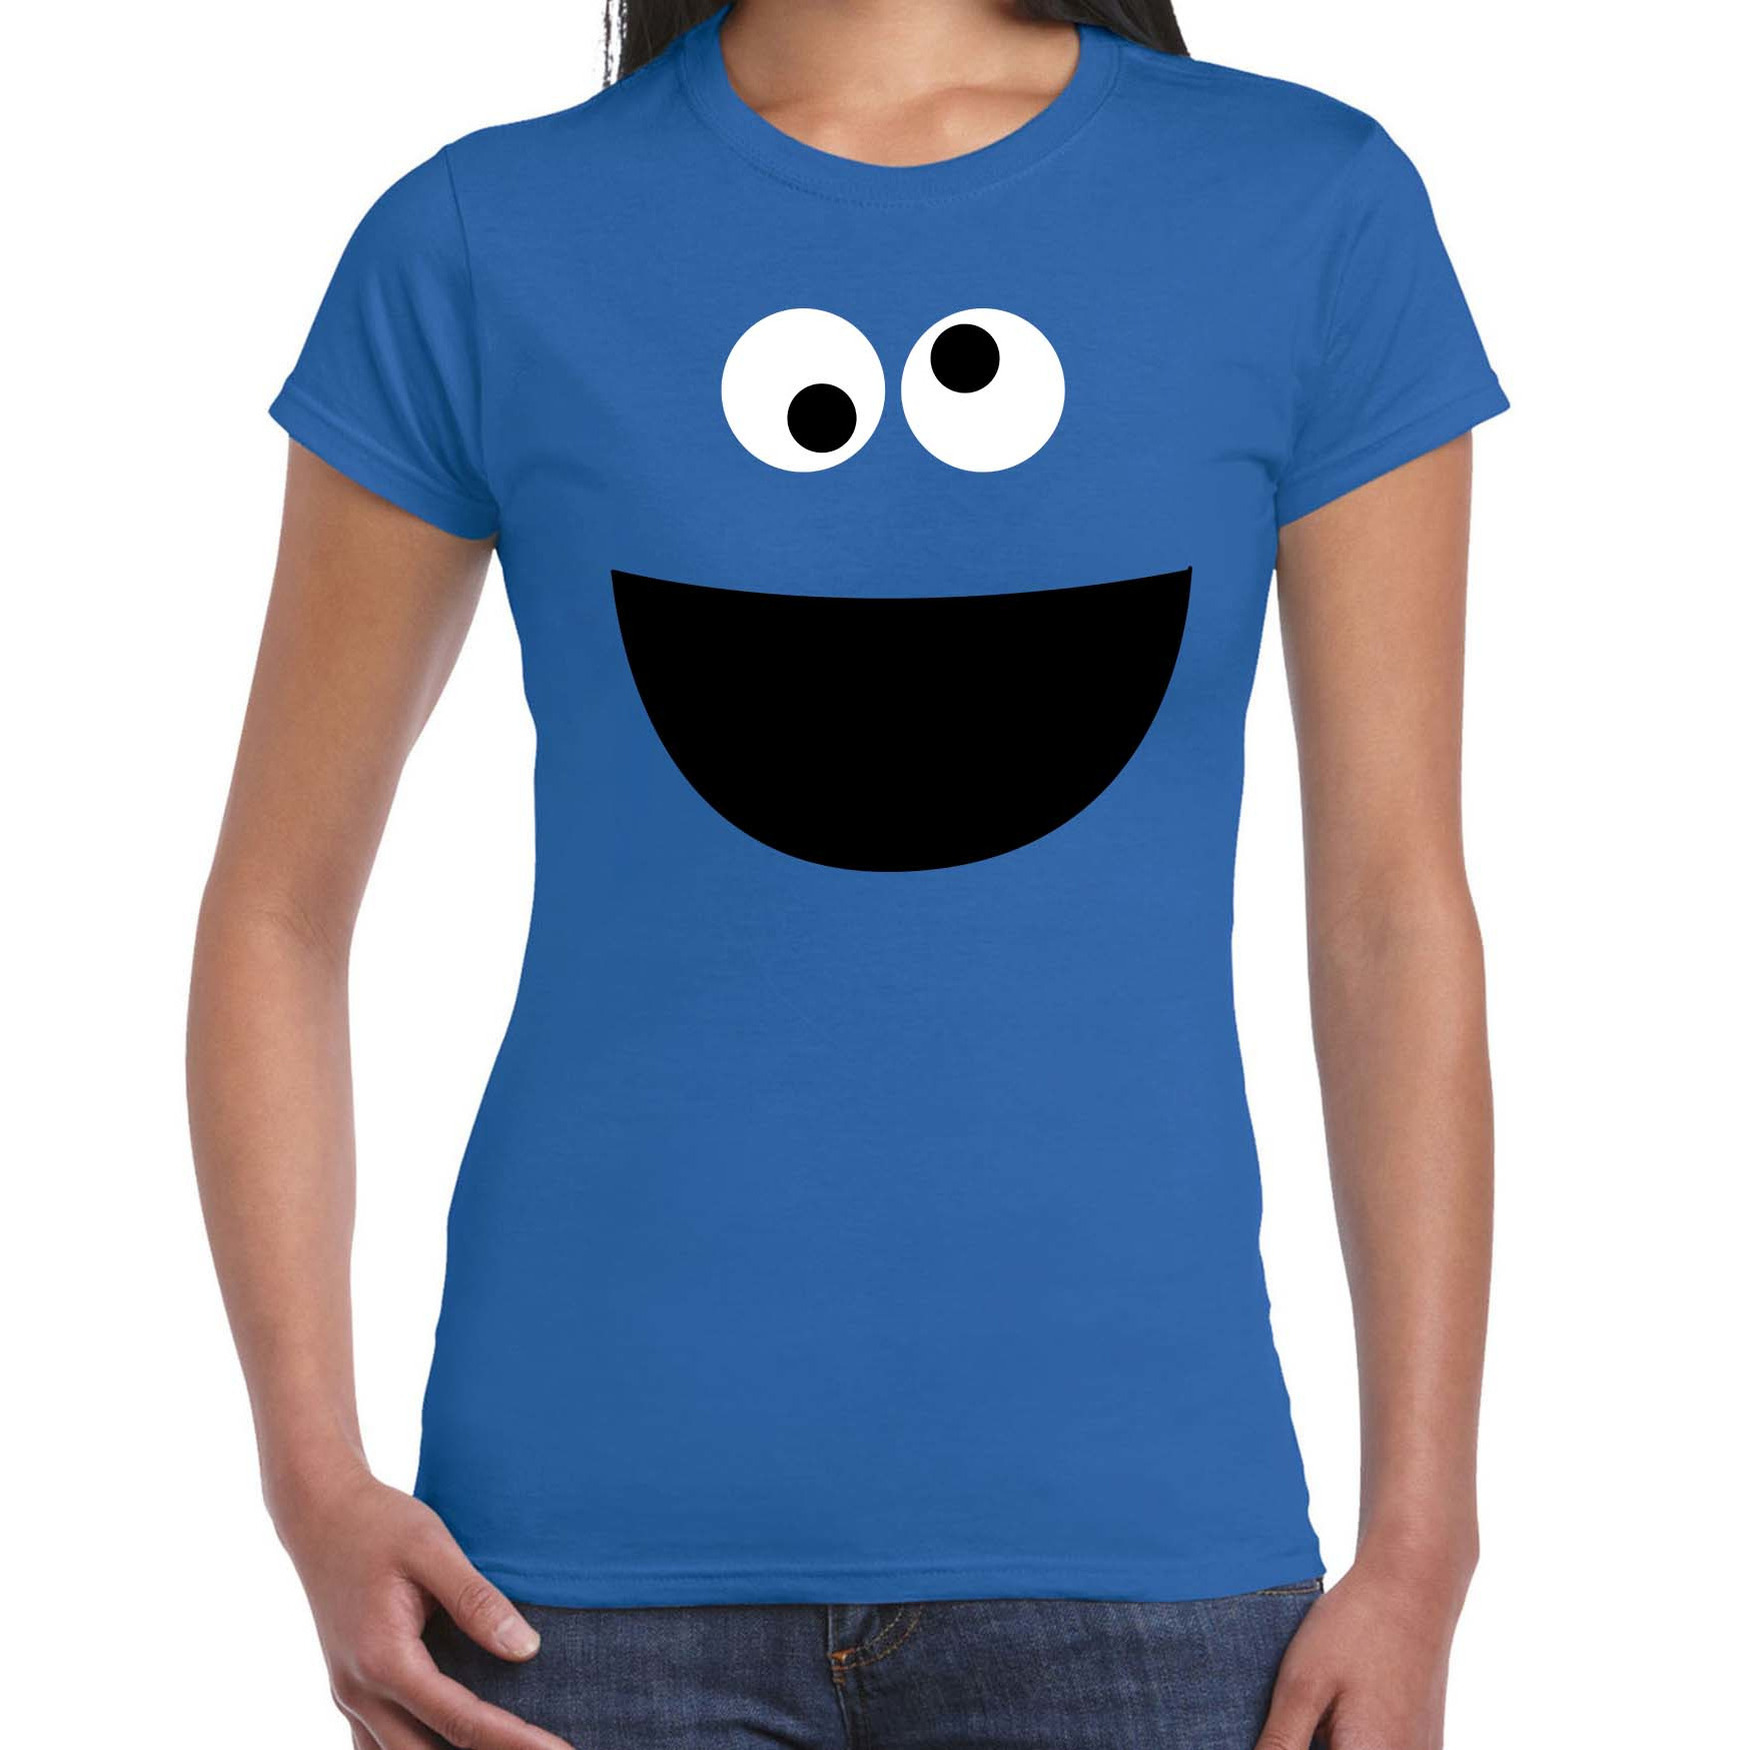 Verkleed-carnaval t-shirt blauw cartoon knuffel monster voor dames Verkleed-kostuum shirts